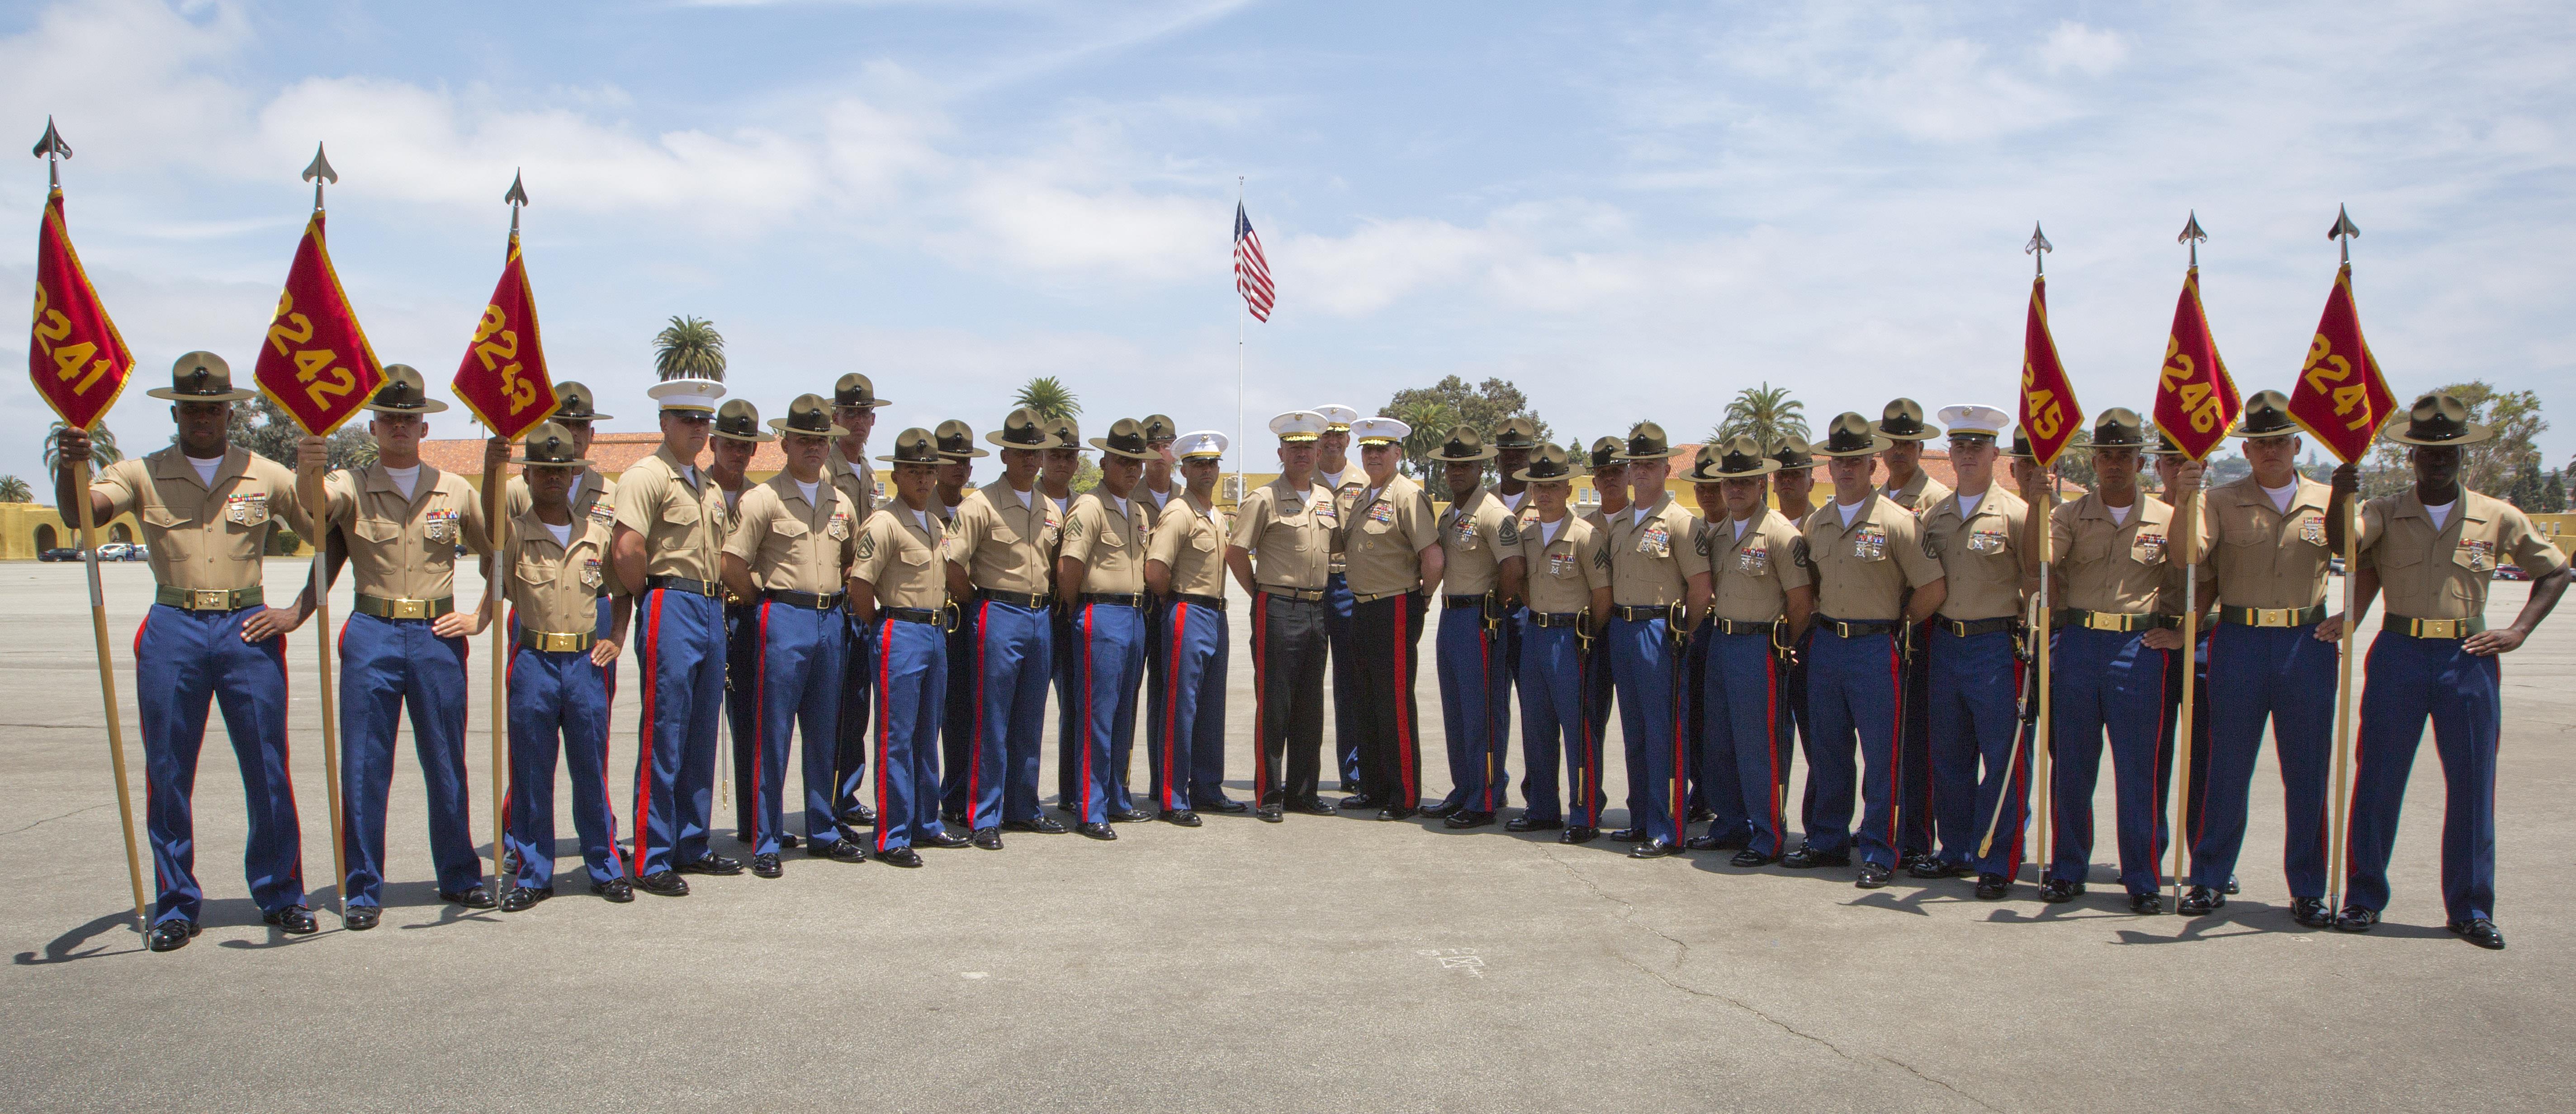 Basic Marine Graduation Ceremony MCRD San Diego